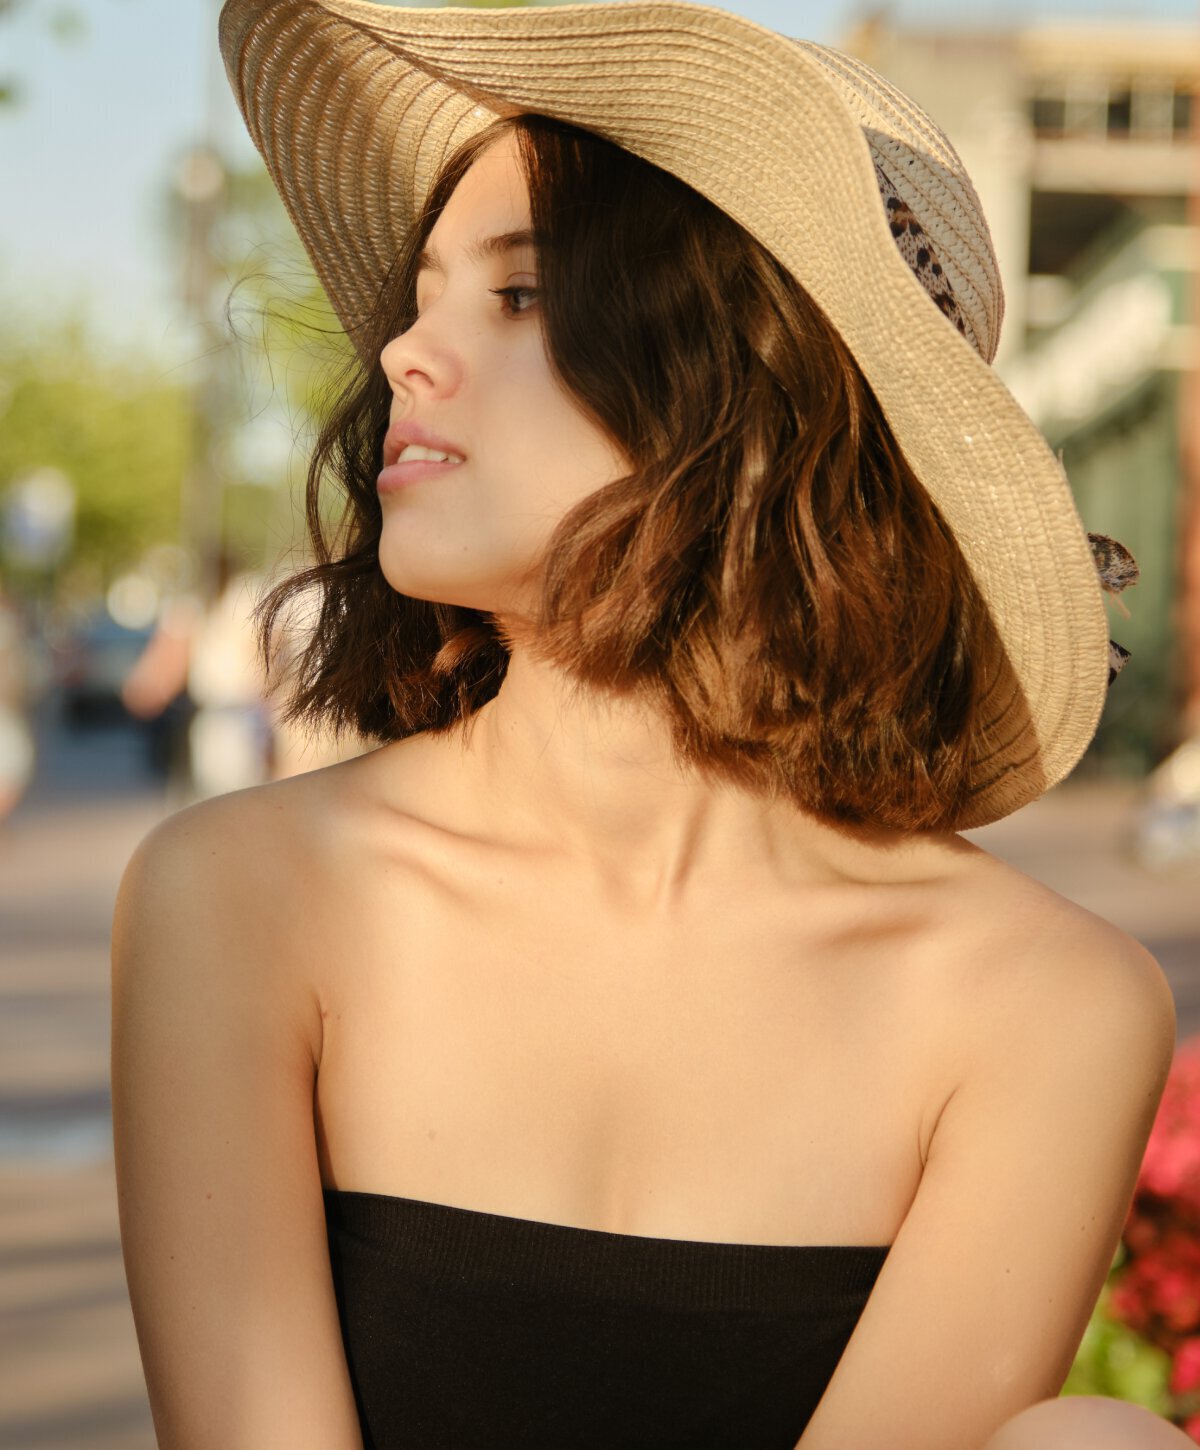 Vienna Medspa model with tan hat